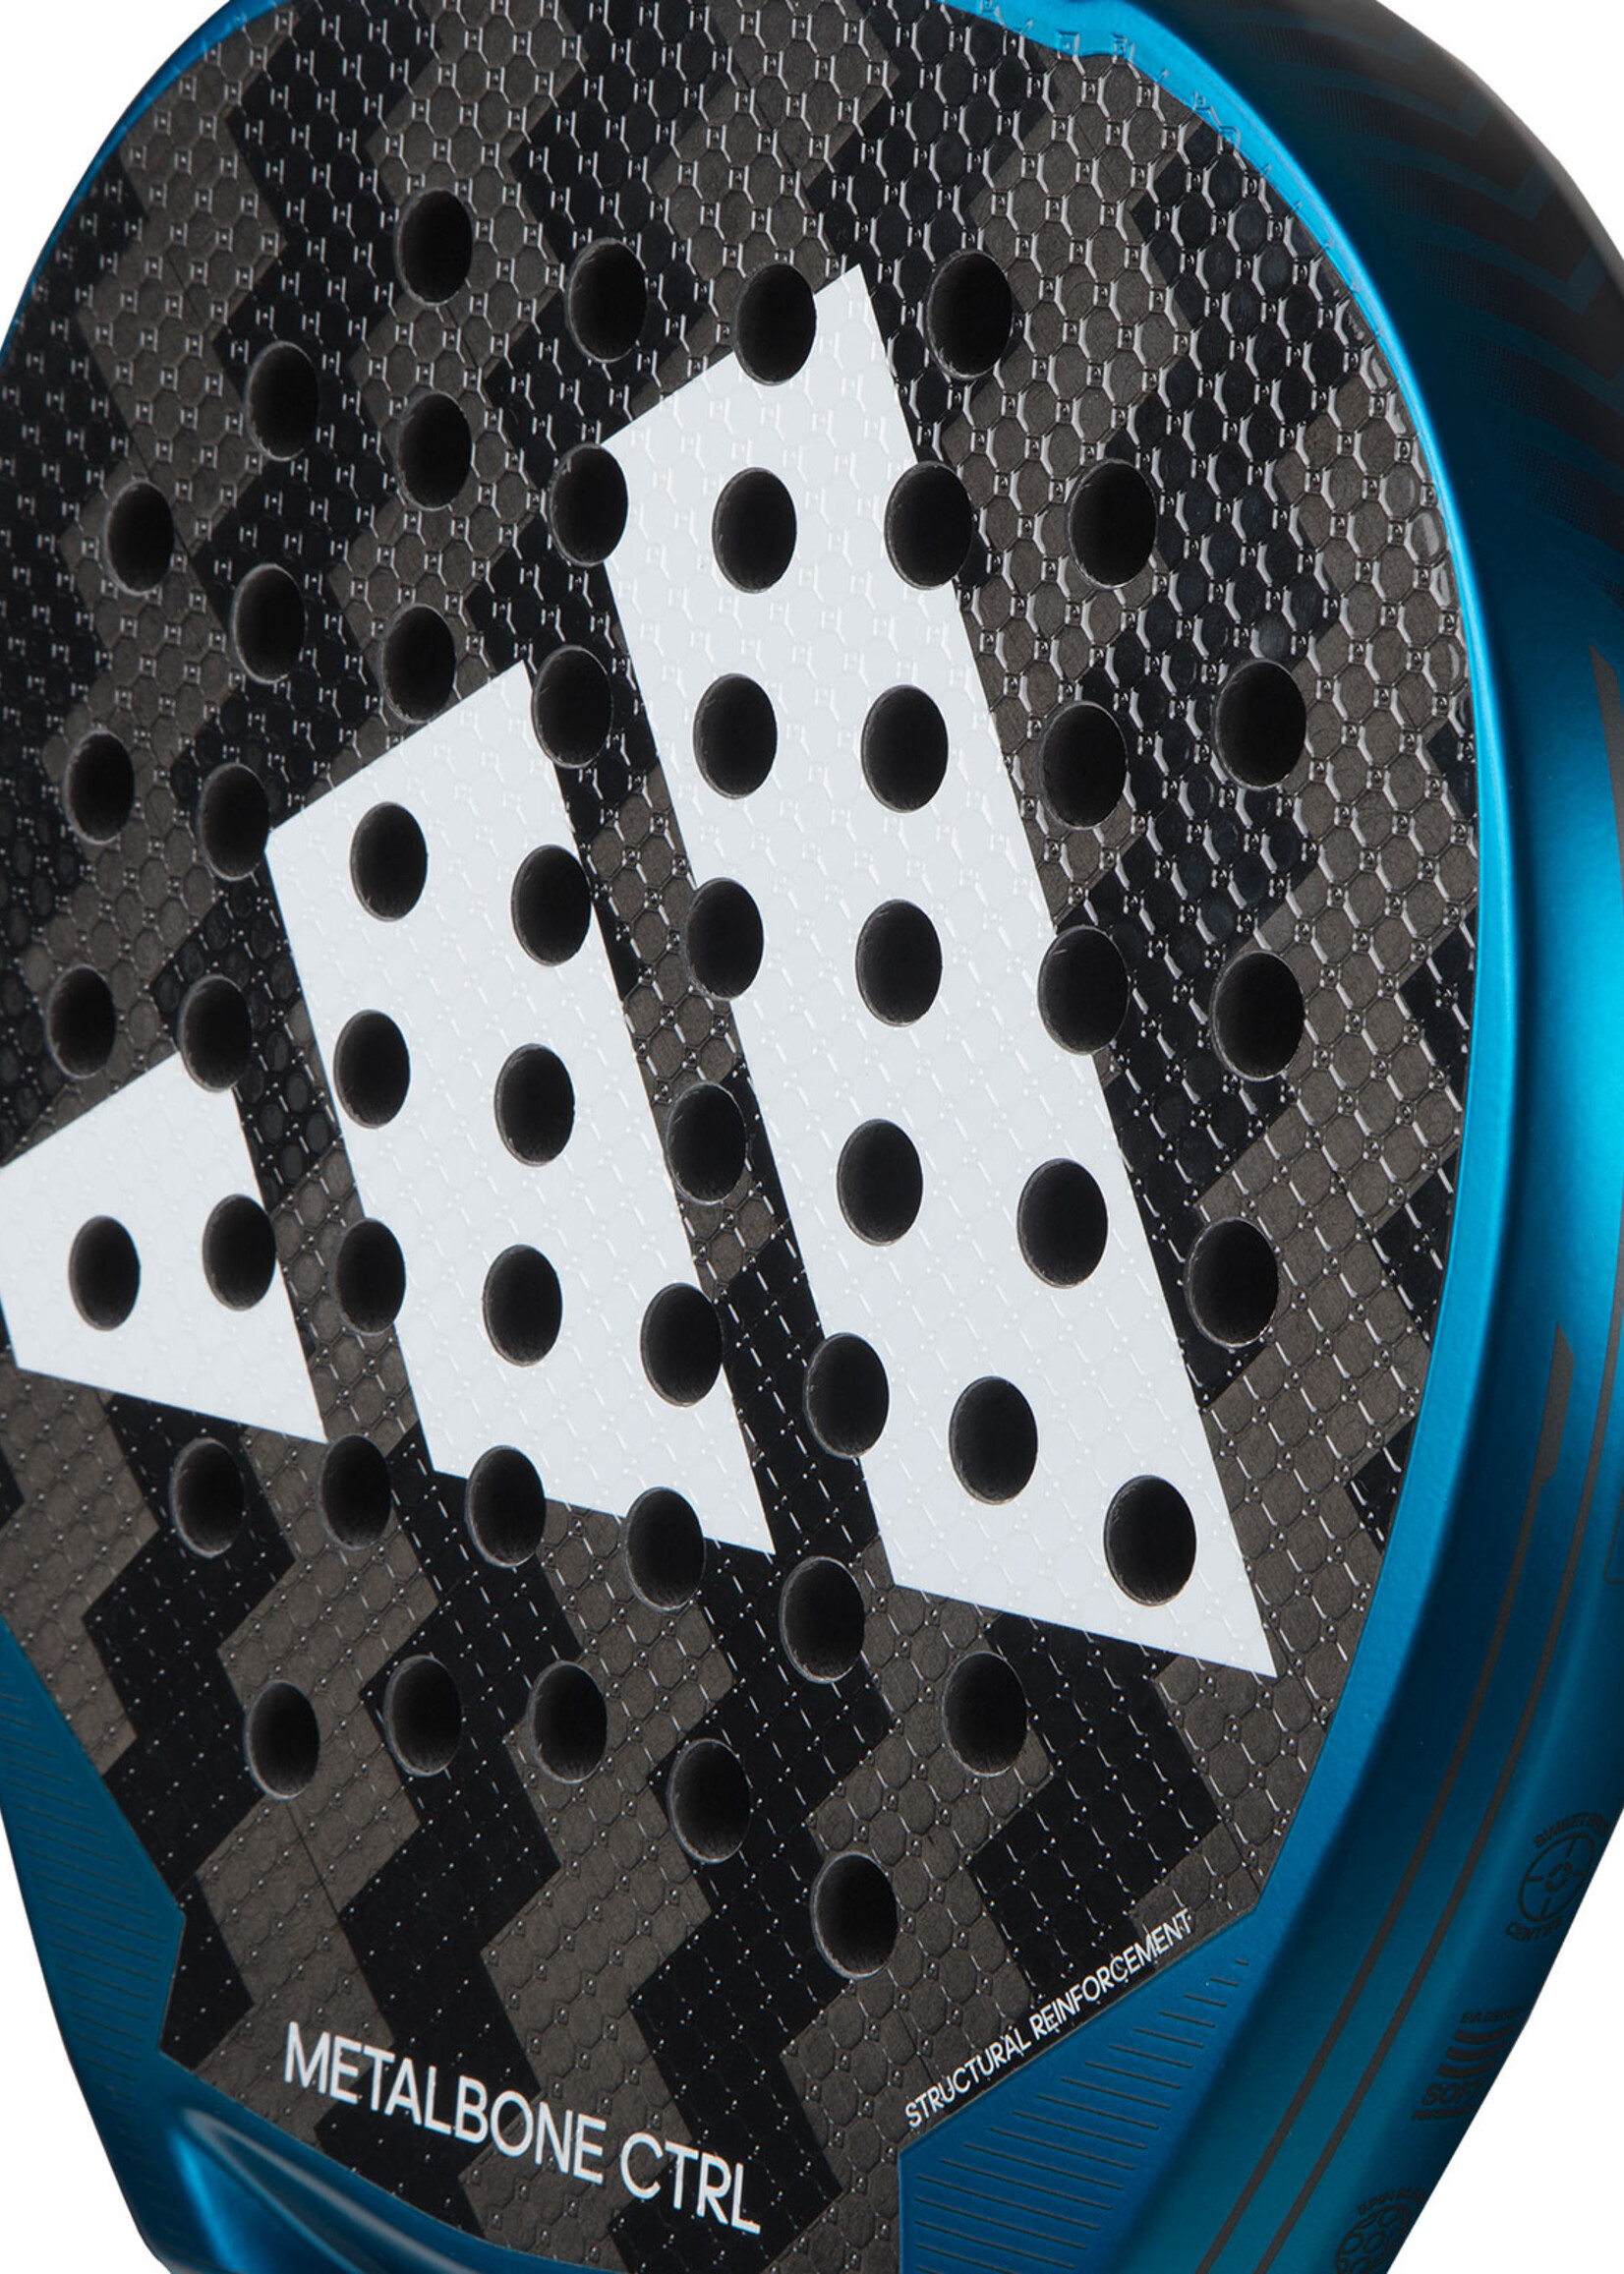 adidas adidas Metalbone Ctrl 3.3 Padel Racquet